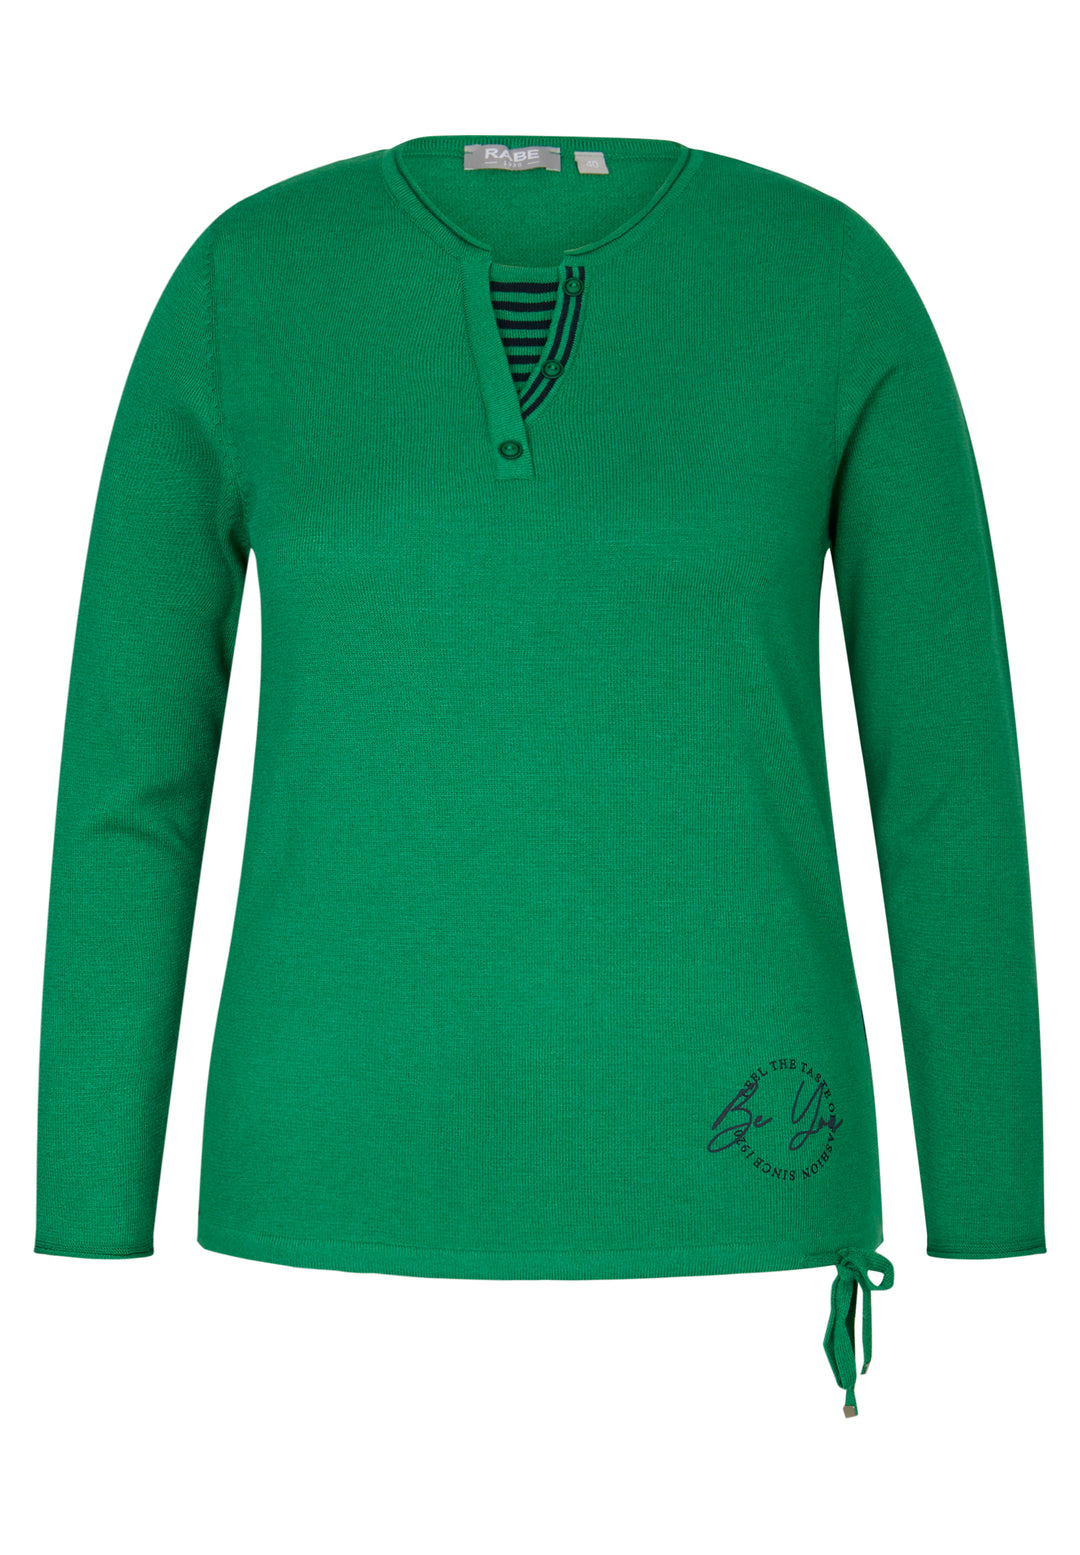 Rabe green soft knit jumper